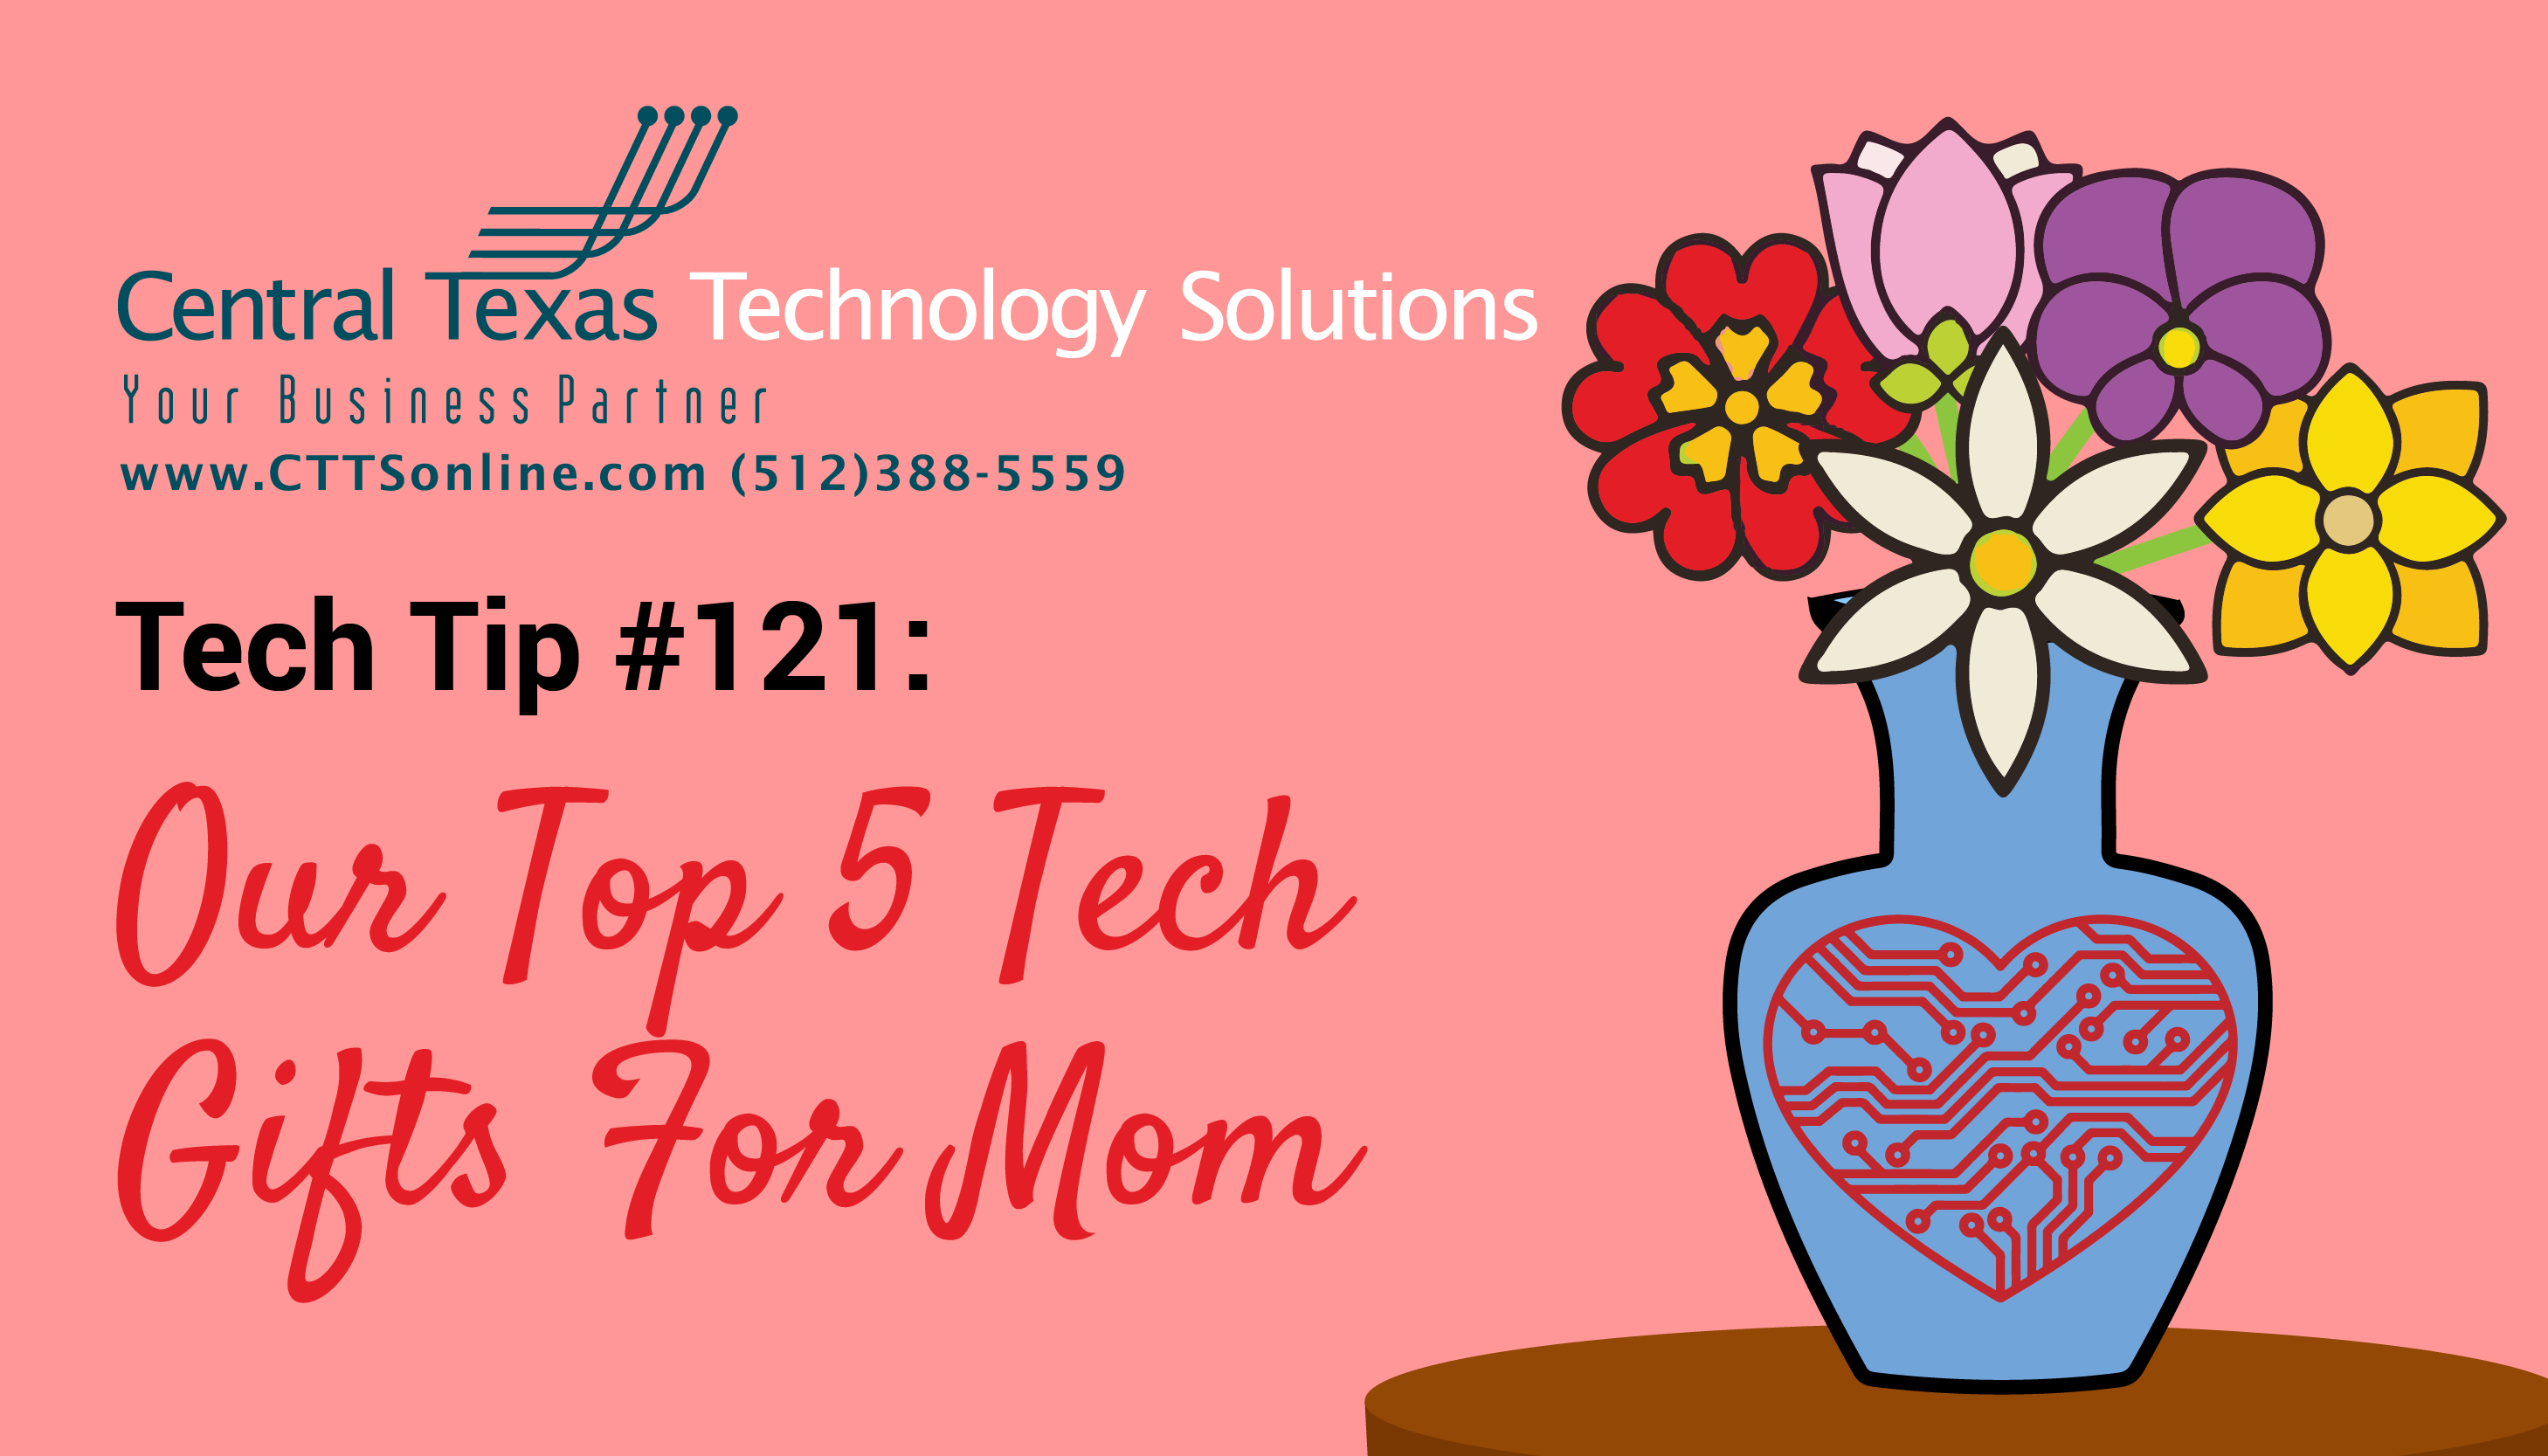 https://www.cttsonline.com/files/2019/04/Tech-Gifts-for-Mom-mothers-day-01.jpg